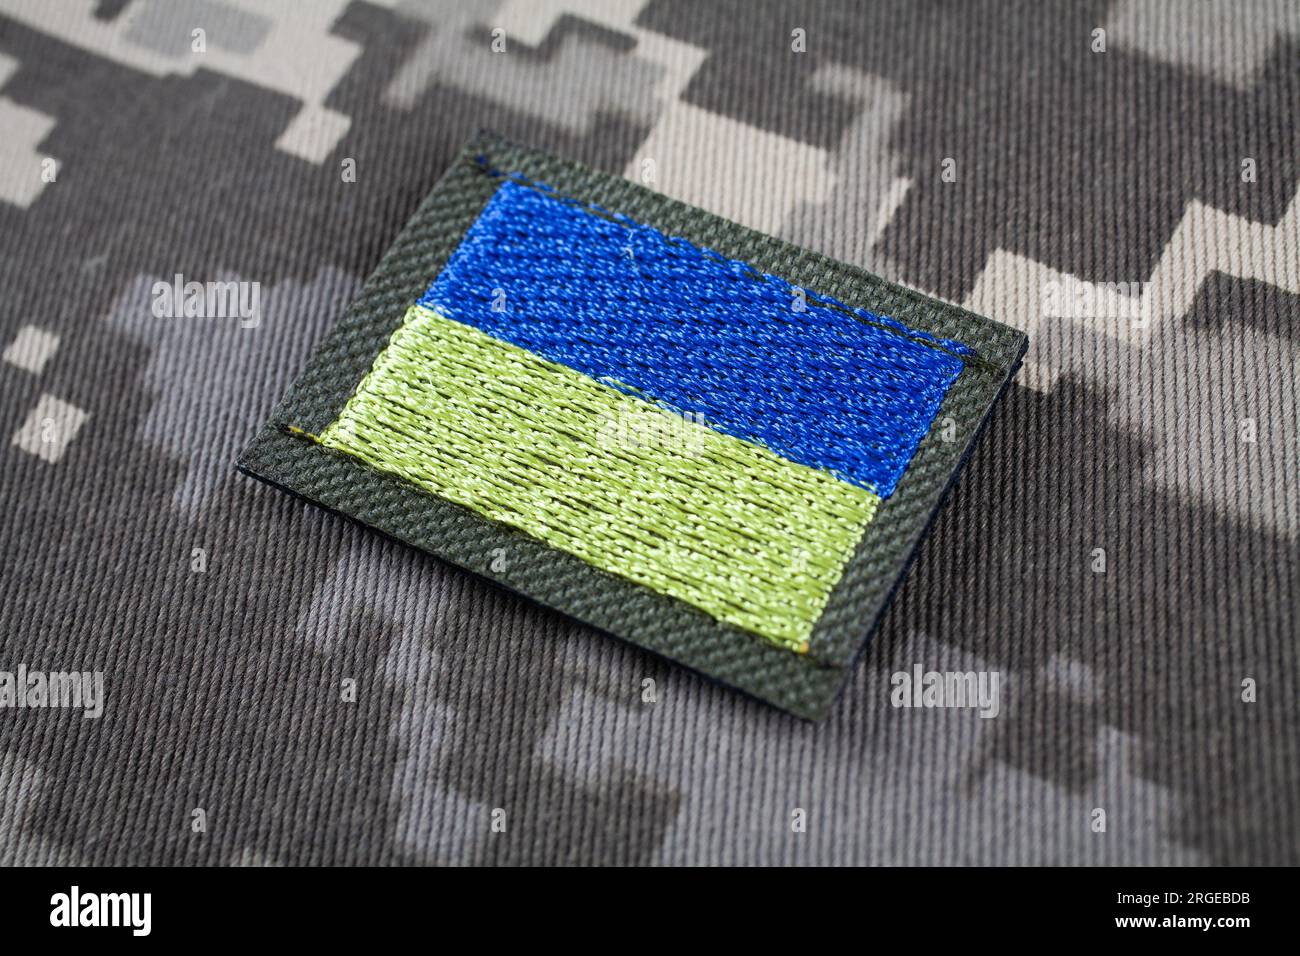 KYIV, UKRAINE - October 5, 2022. Russian invasion in Ukraine 2022. Ukraine Army Flag Patch uniform shoulder sleeve insignia badge on camouflaged unifo Stock Photo